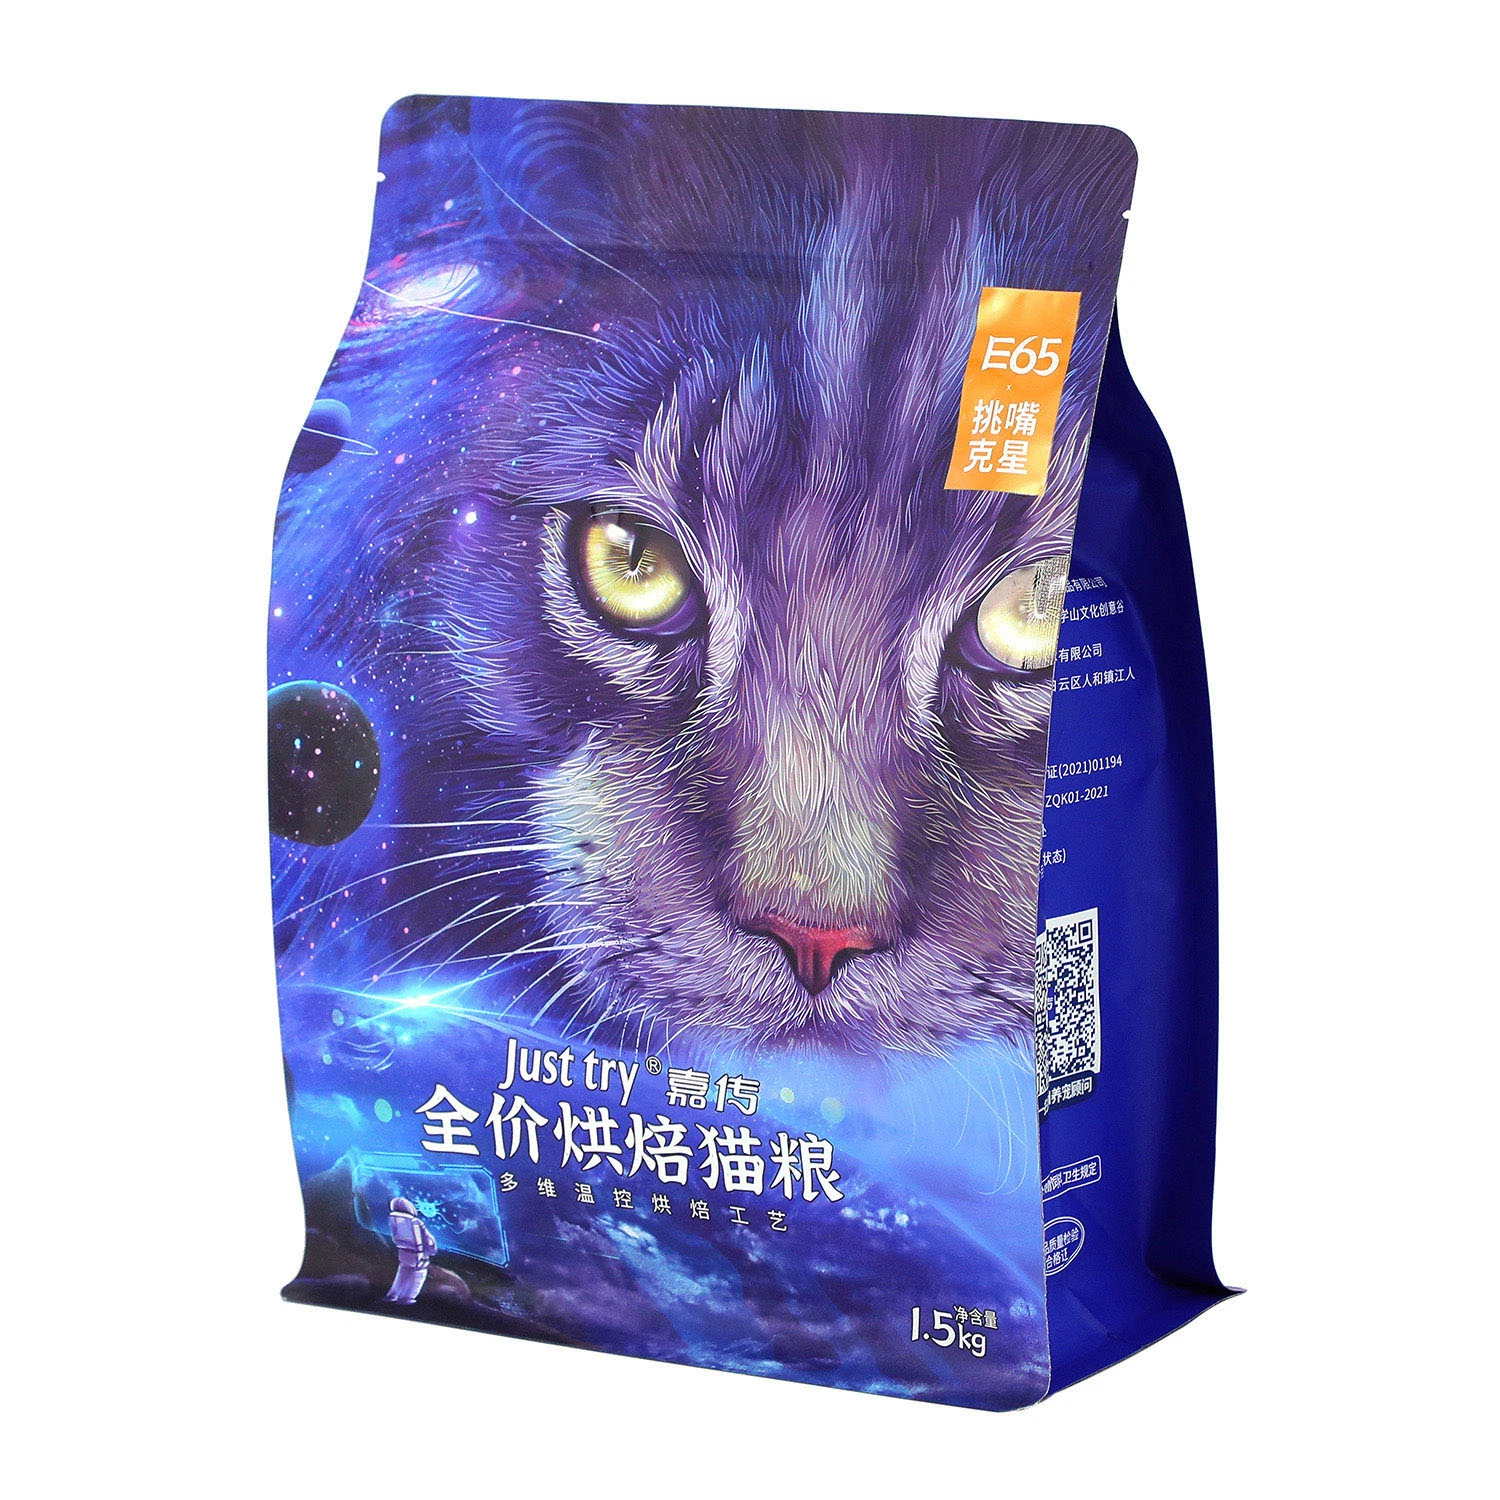 Production of Dog Food Flat Bag, Zipper Zipper Bag, Dog Food Zipper Slider Bag with Bottom Self-Sealing, Cat Food Self-Sealing Flat Plastic Bag